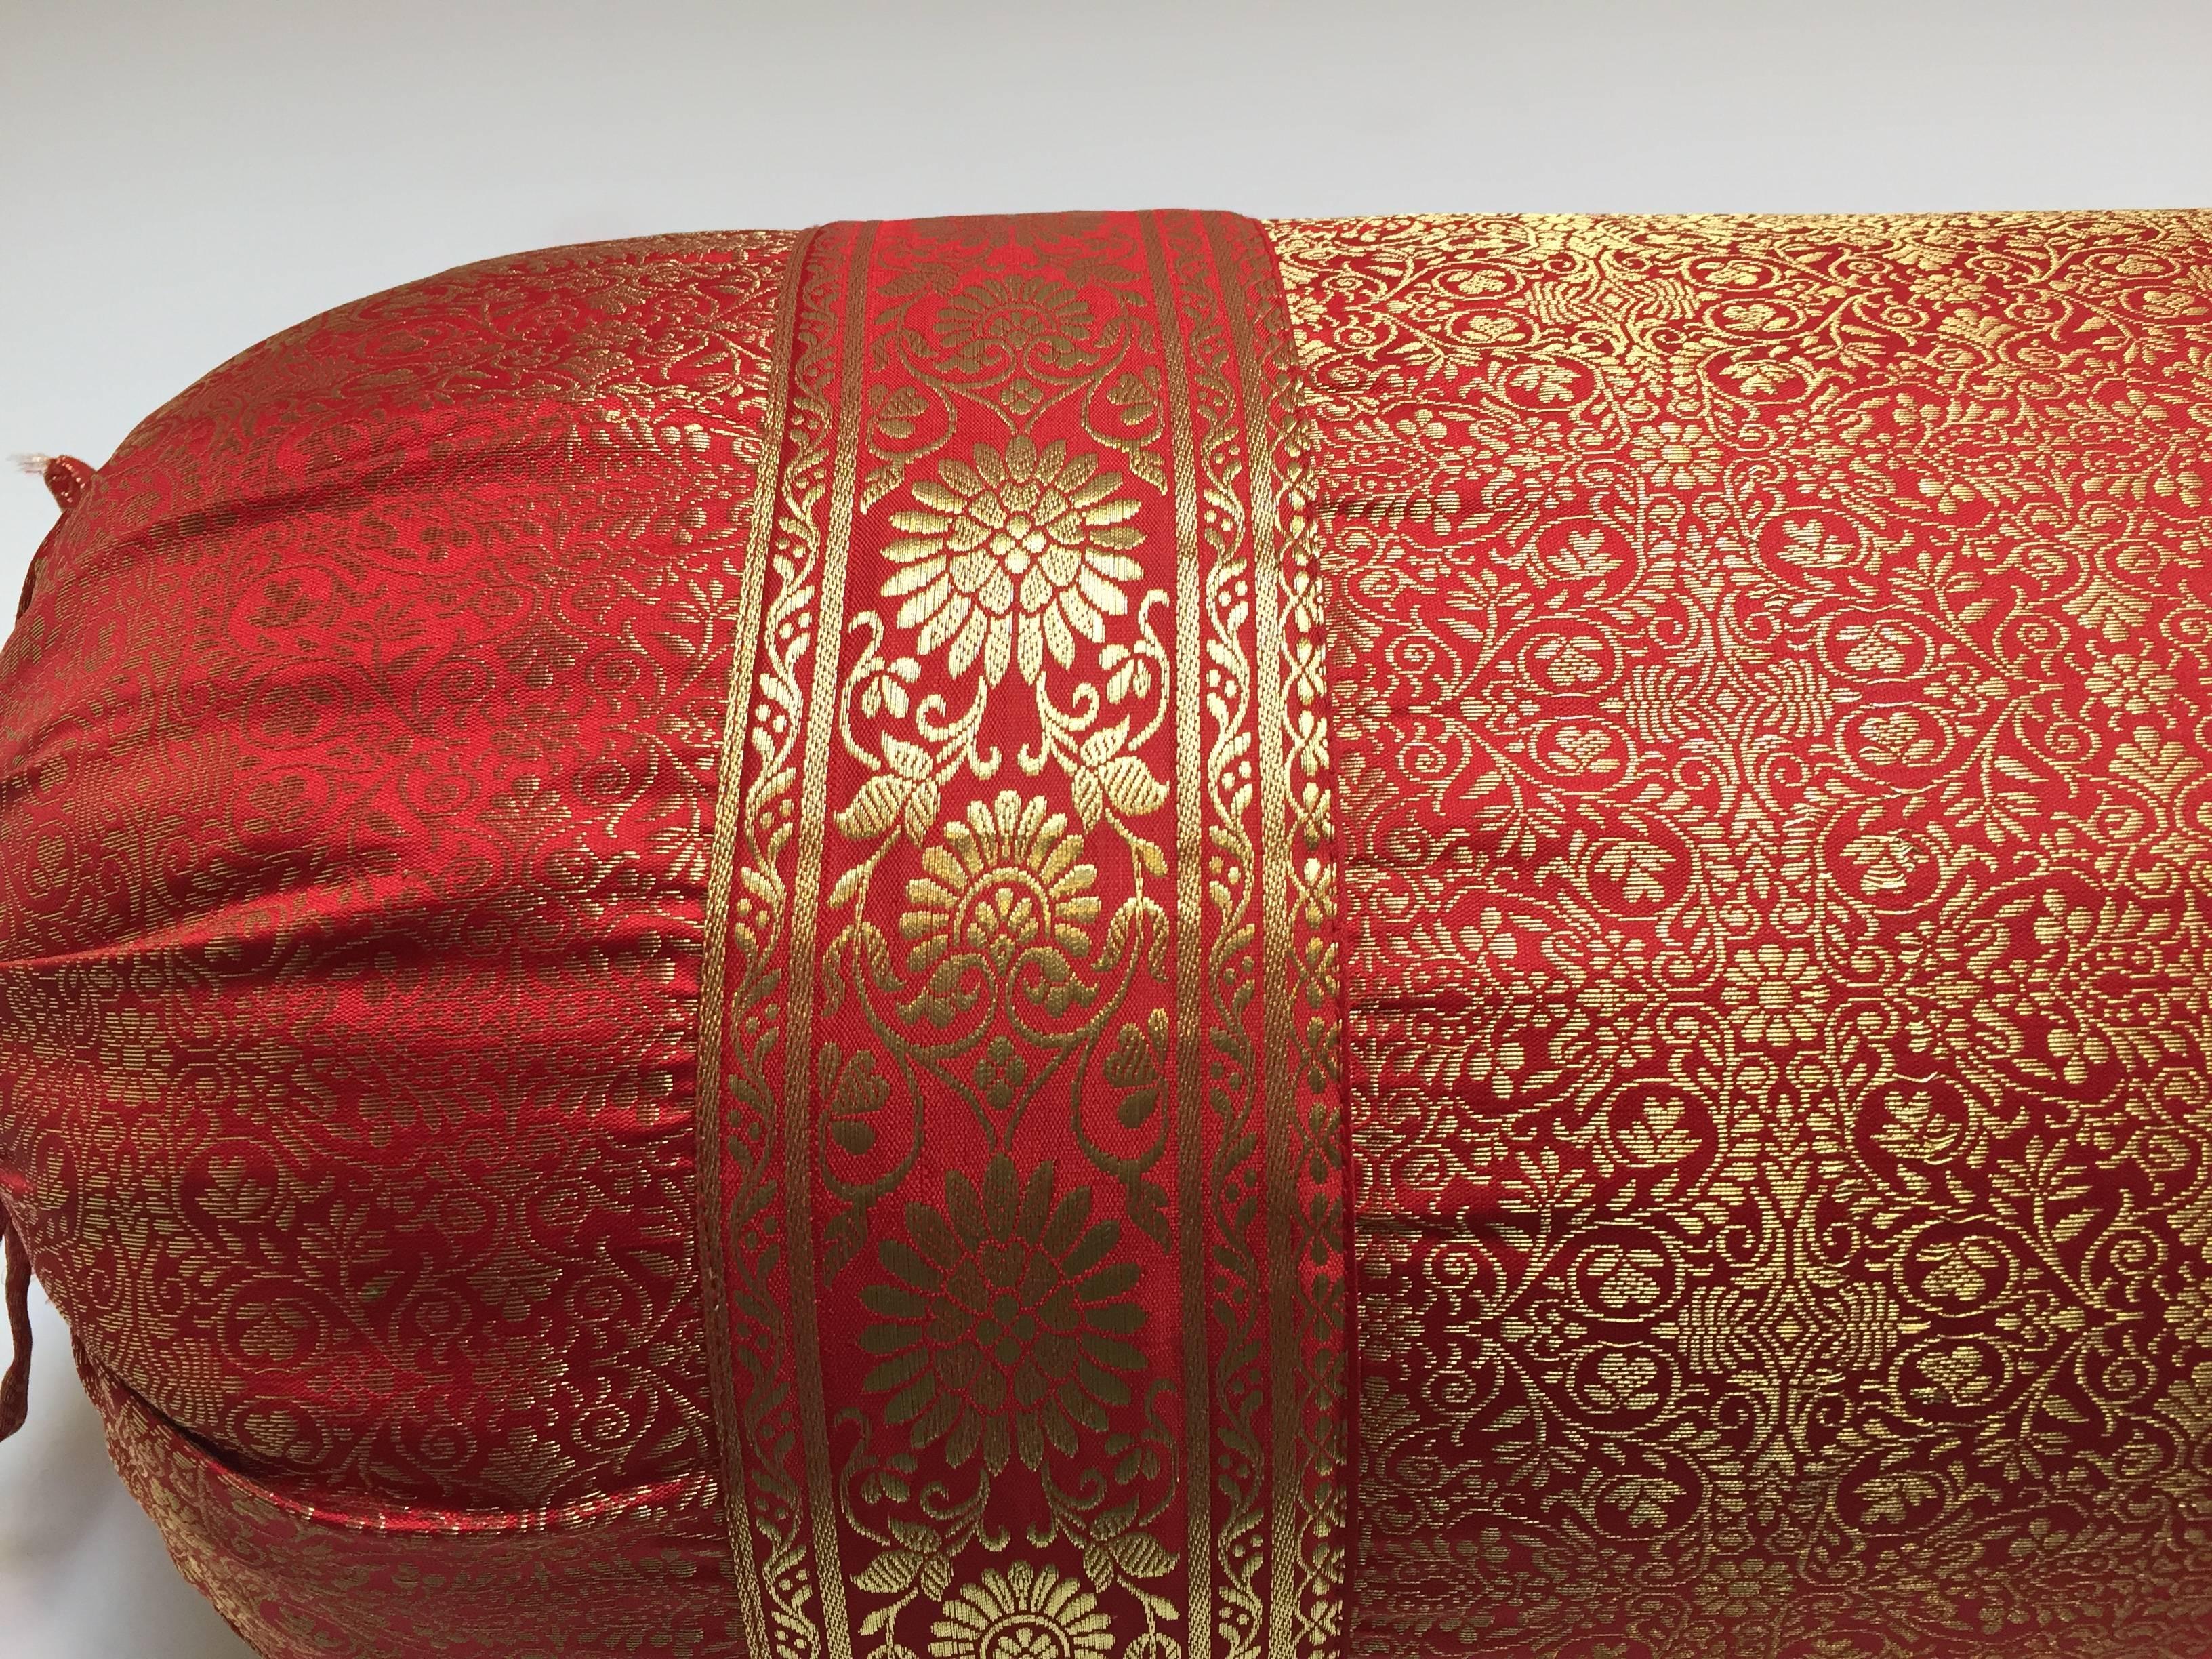 Pair of Large Silk Bolster Pillows Made from Vintage Wedding Silk Saris 4